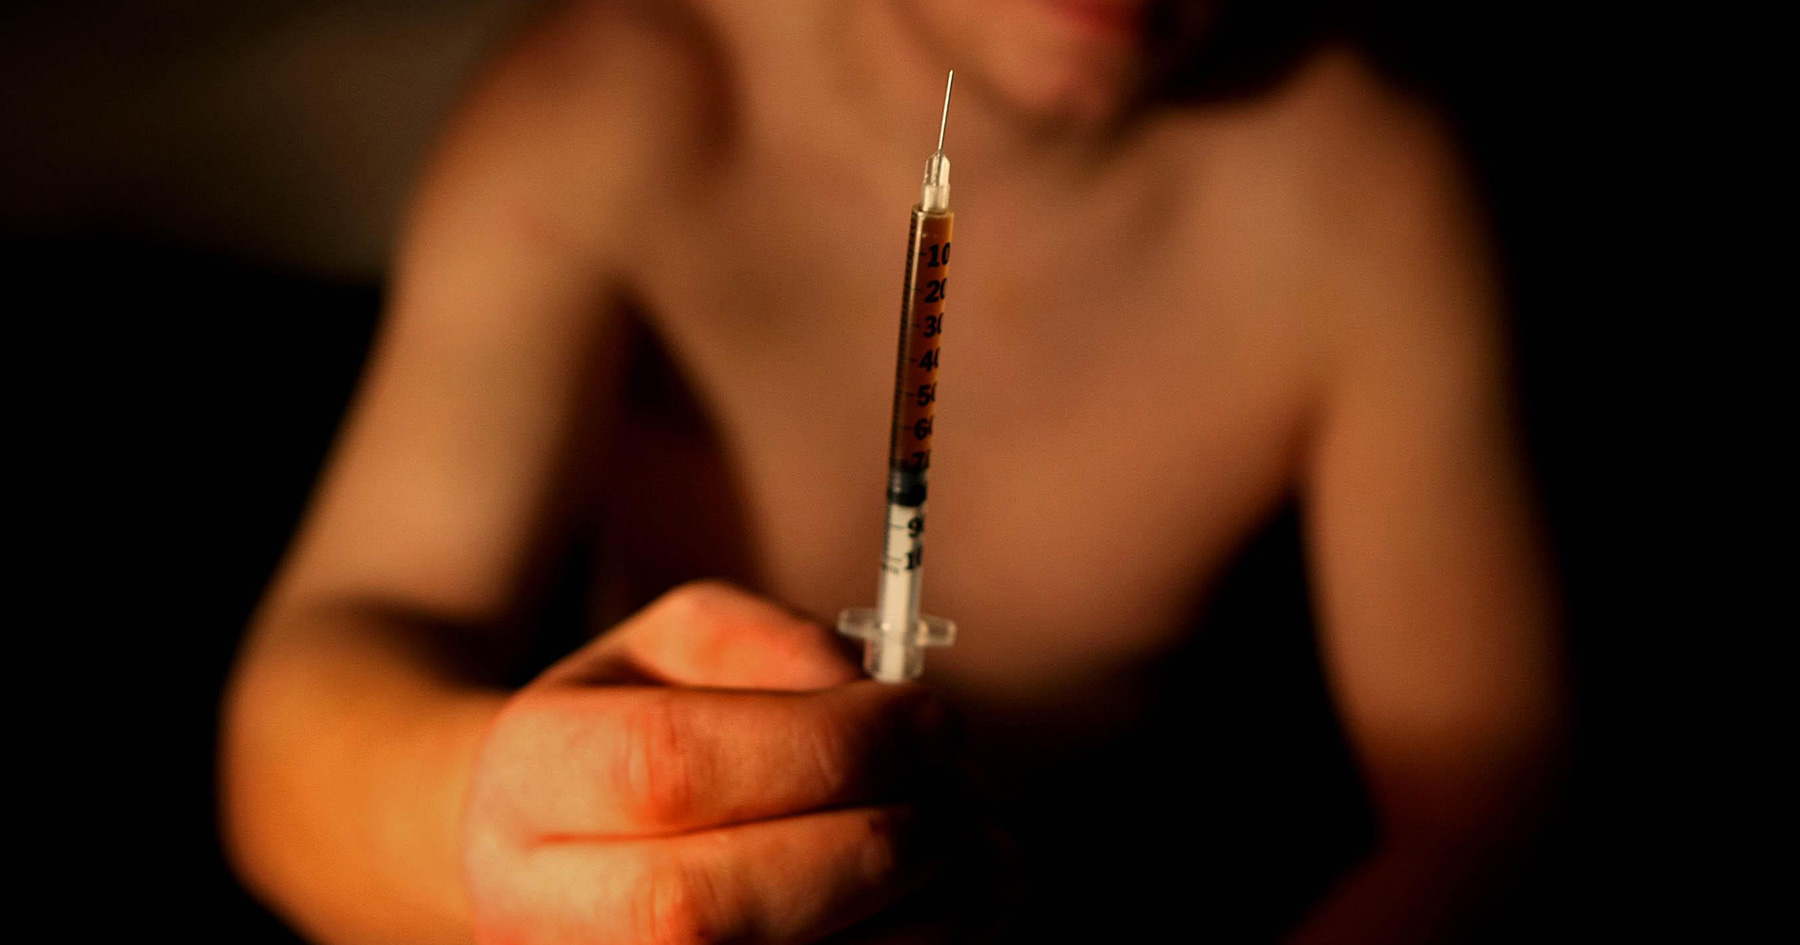 Man offering heroin needle